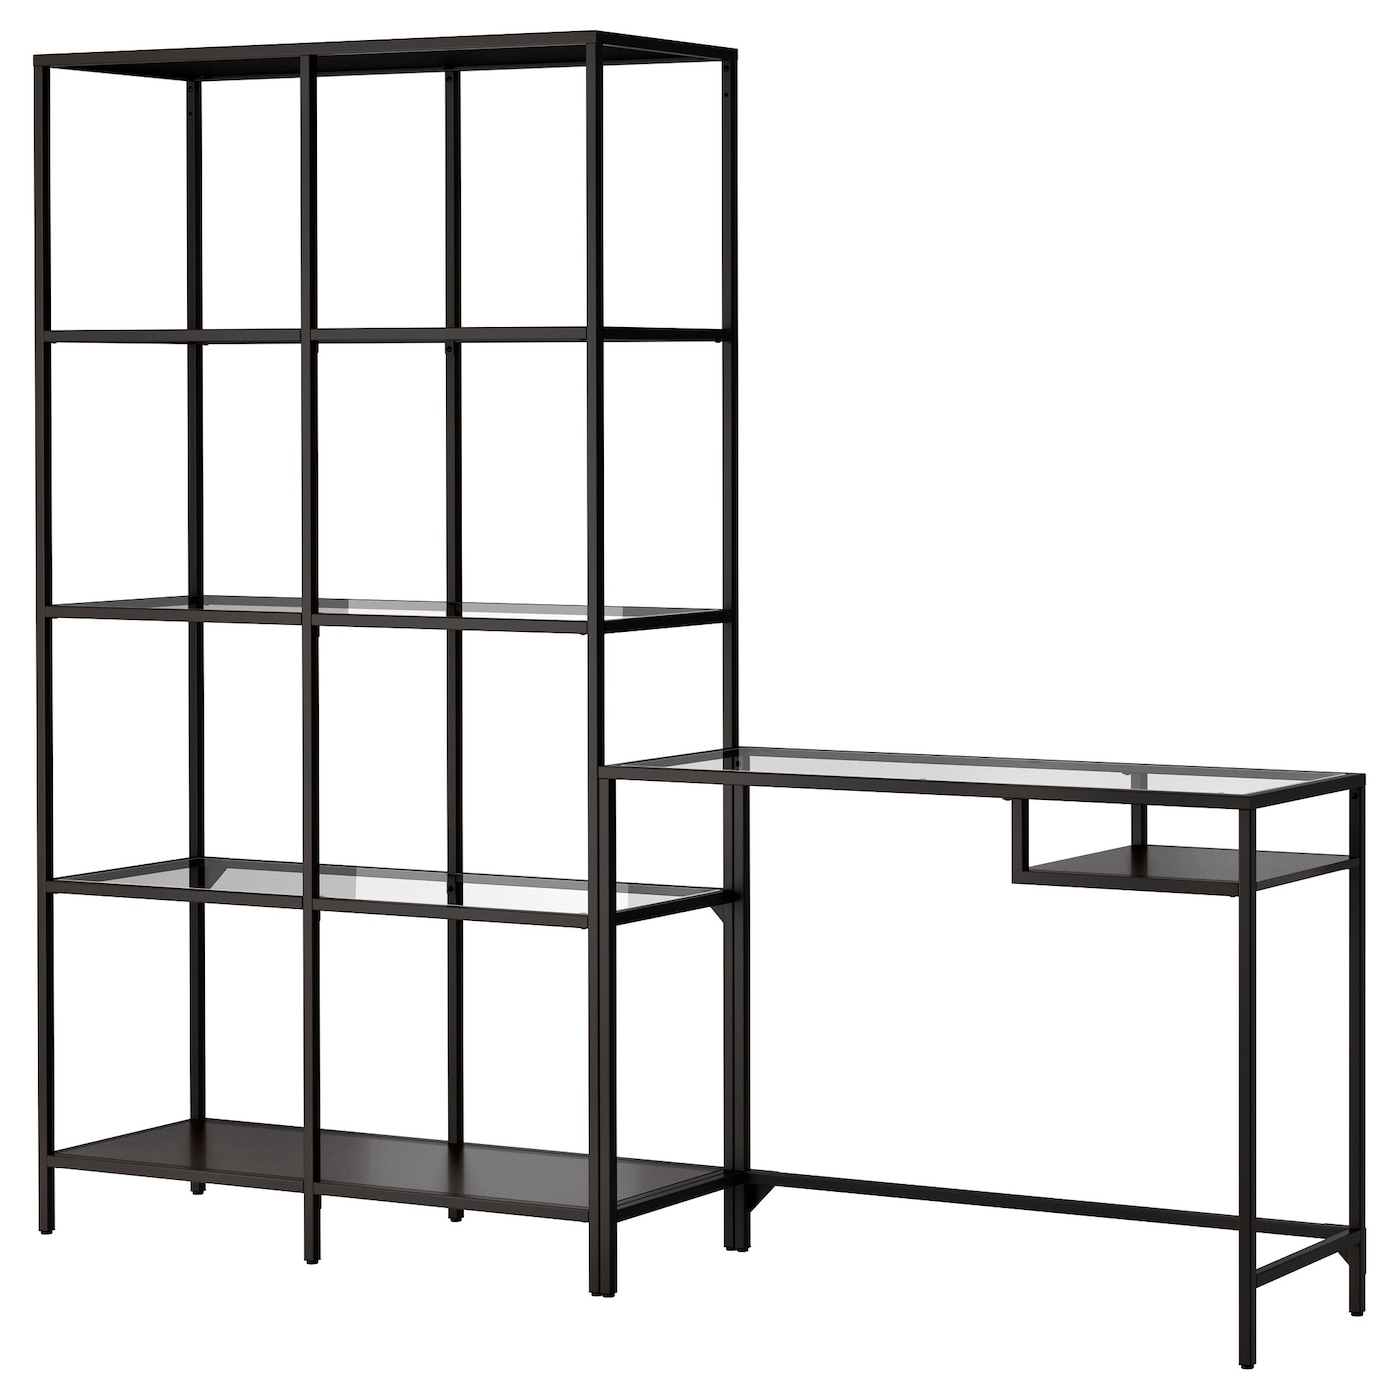 Книжный шкаф - VITTSJÖ /VITTSJO IKEA/ ВИТШЕ ИКЕА,   200х36 см, черный